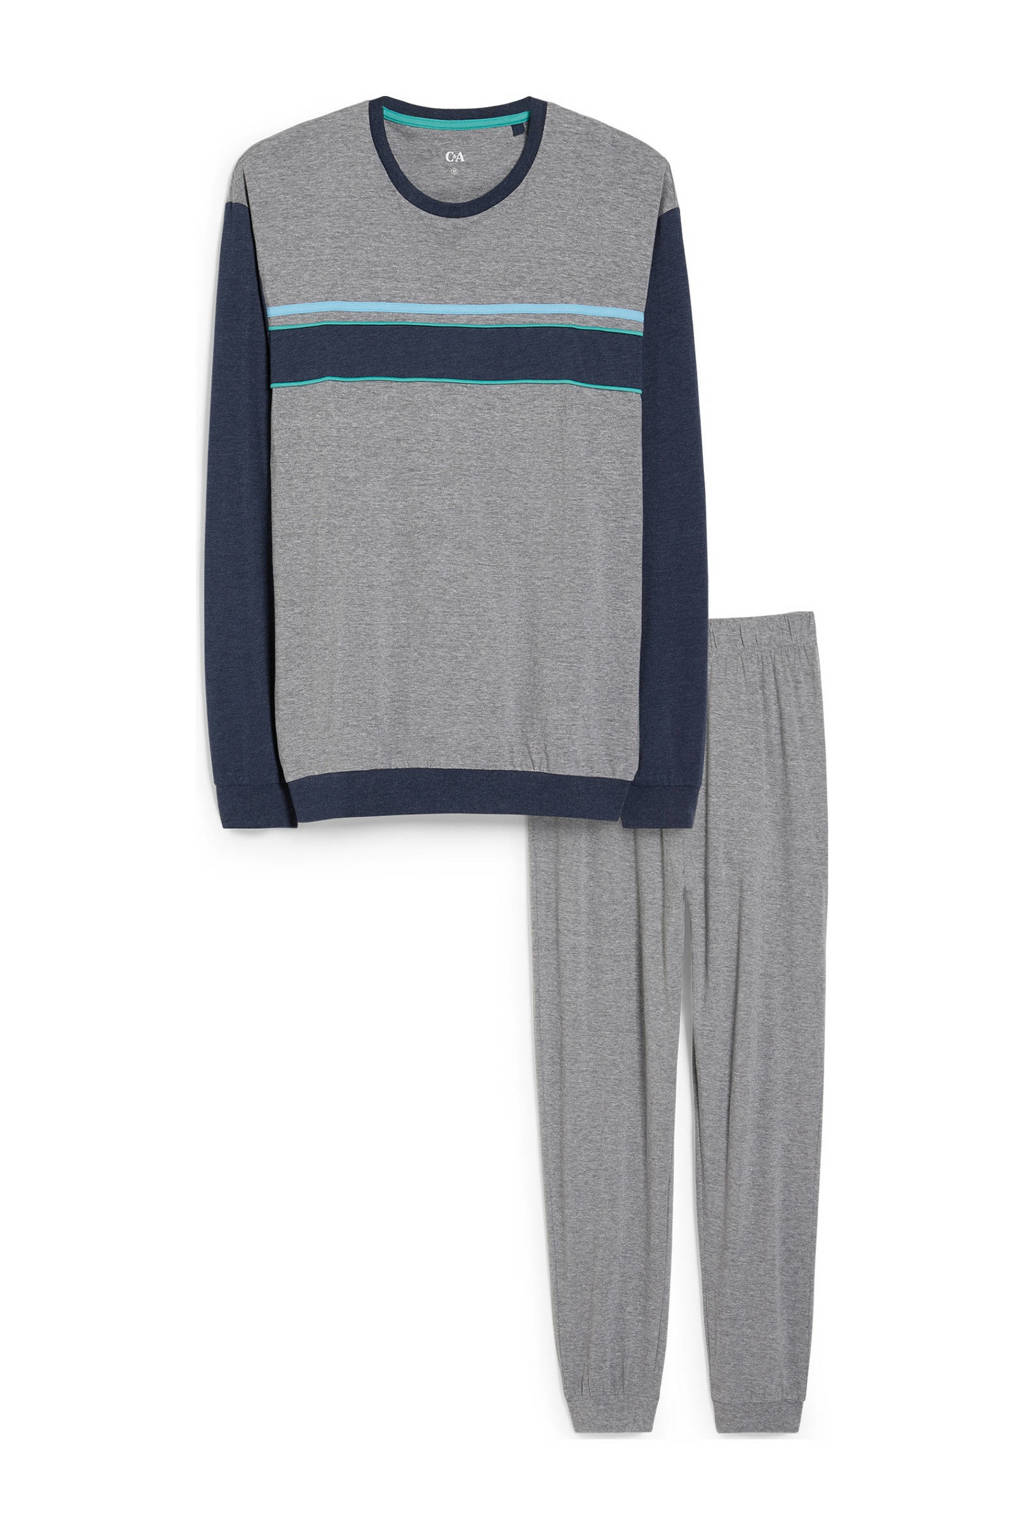 C&A pyjama grijs/donkerblauw, Grijs/donkerblauw